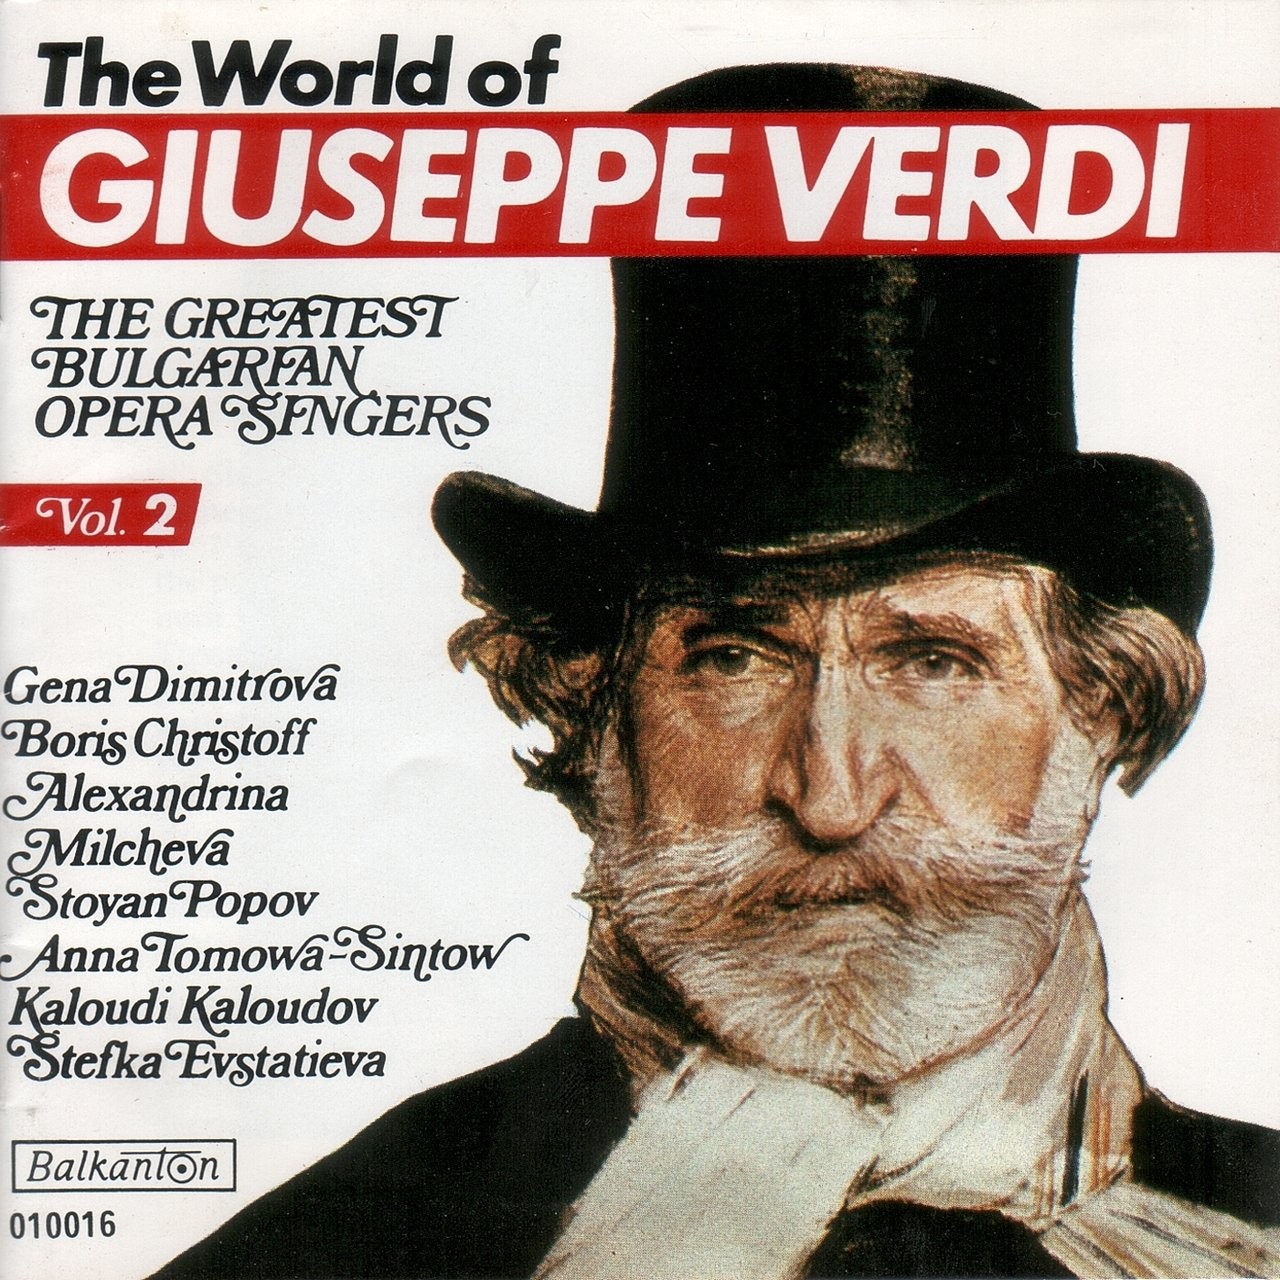 The World of Guiseppe Verdi. Vol. 2